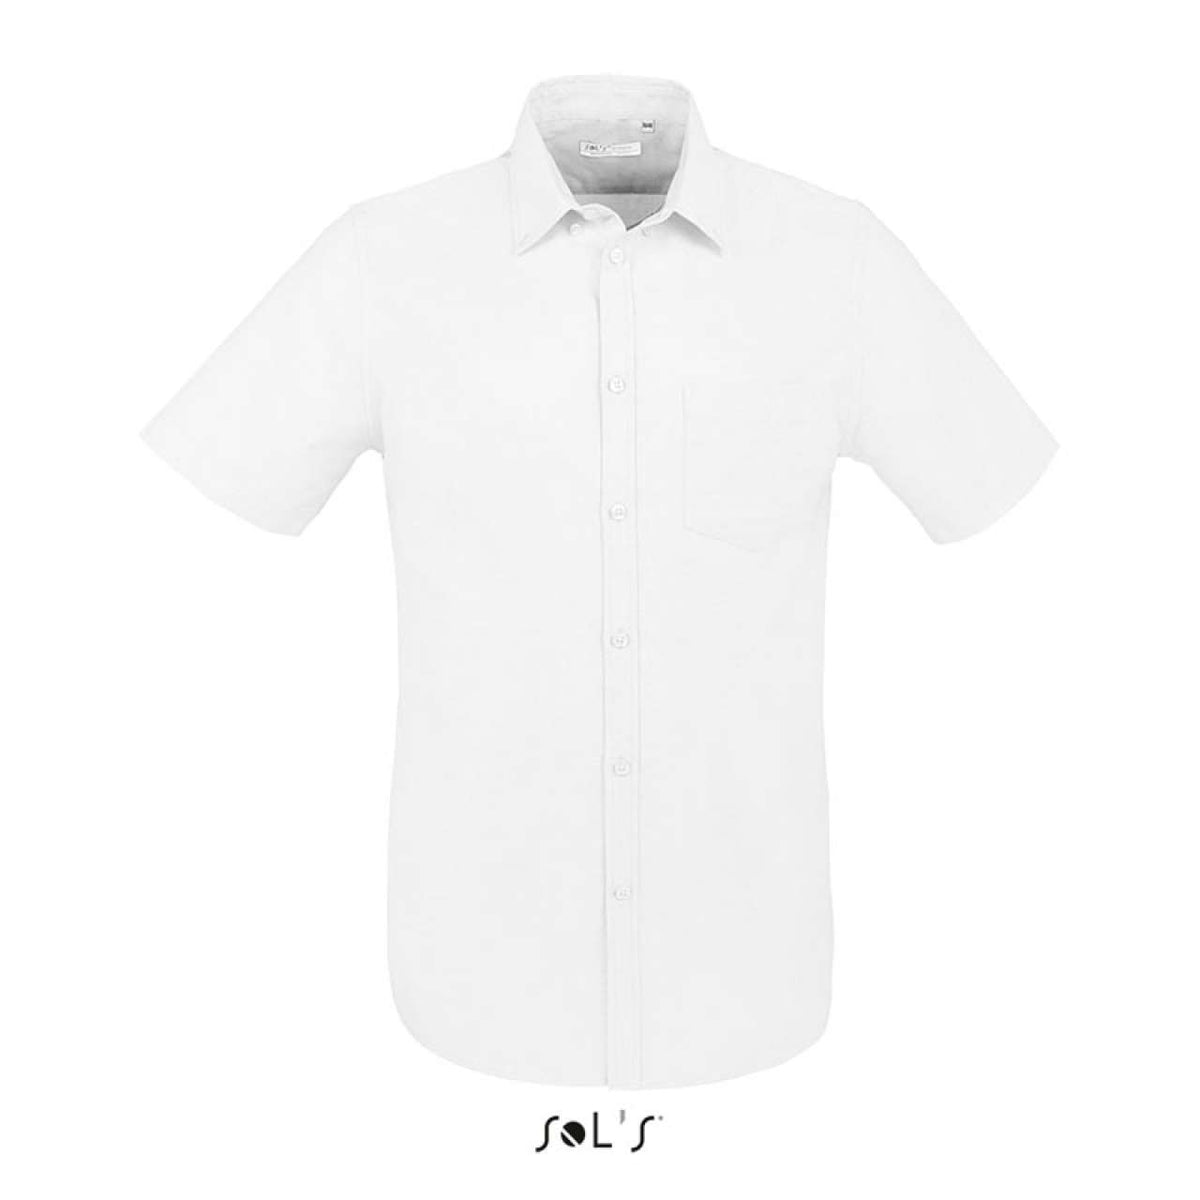 SOL'S Herren Hemd Kurzarm Classic Oxford Shirt Kurzarmhemd Business